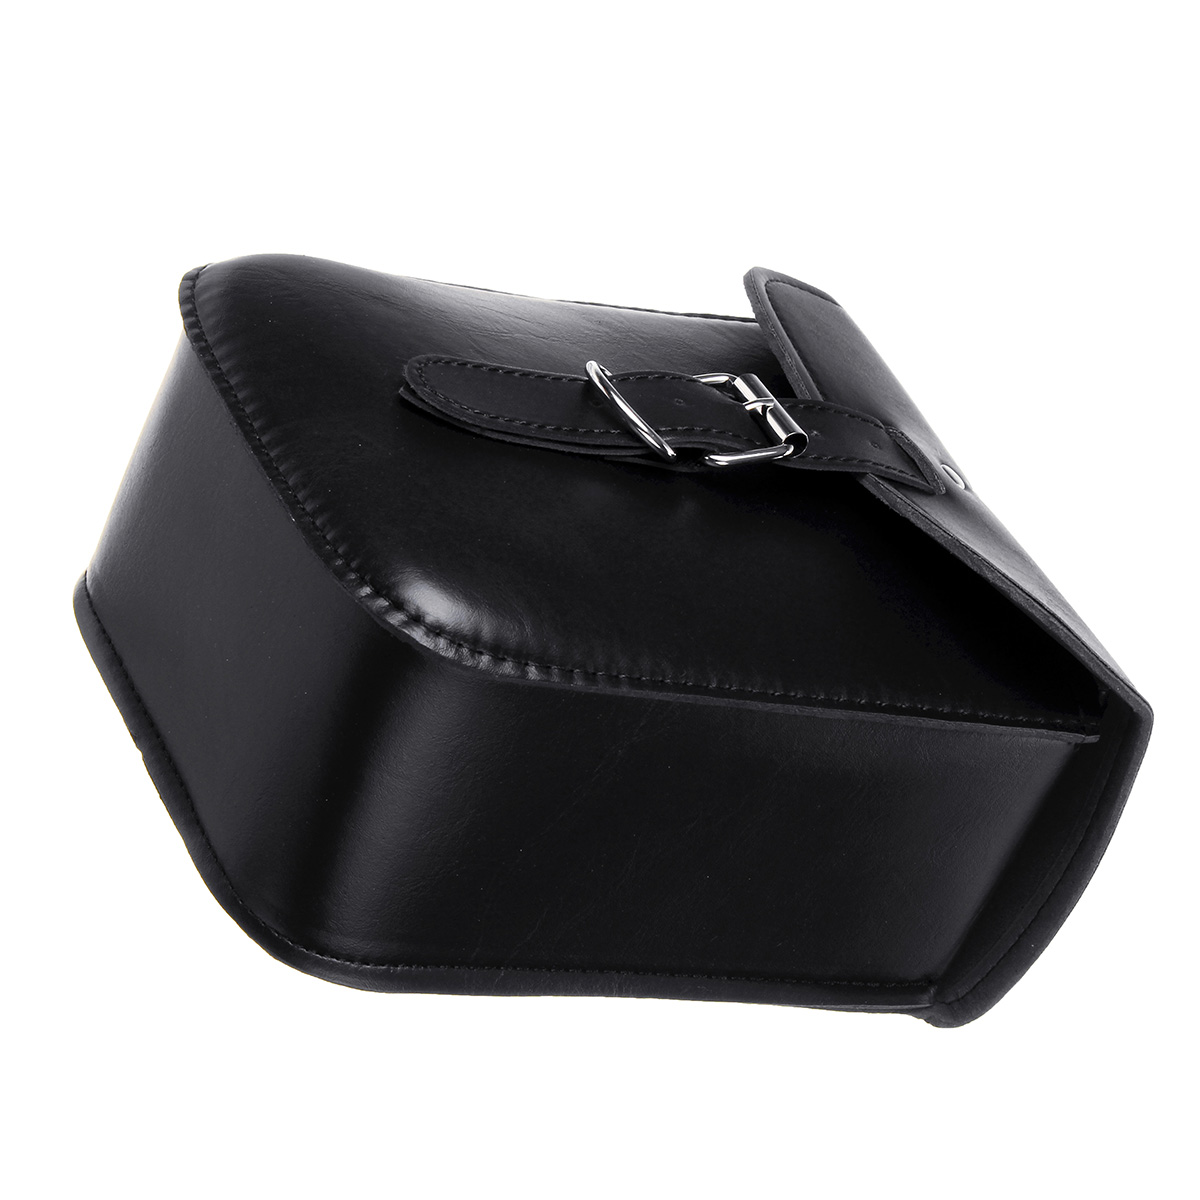 Motorcycle Saddlebags Luggage PU Leather Pouch Bag for Honda/Yamaha/Kawasaki/Harley Sportster - Auto GoShop